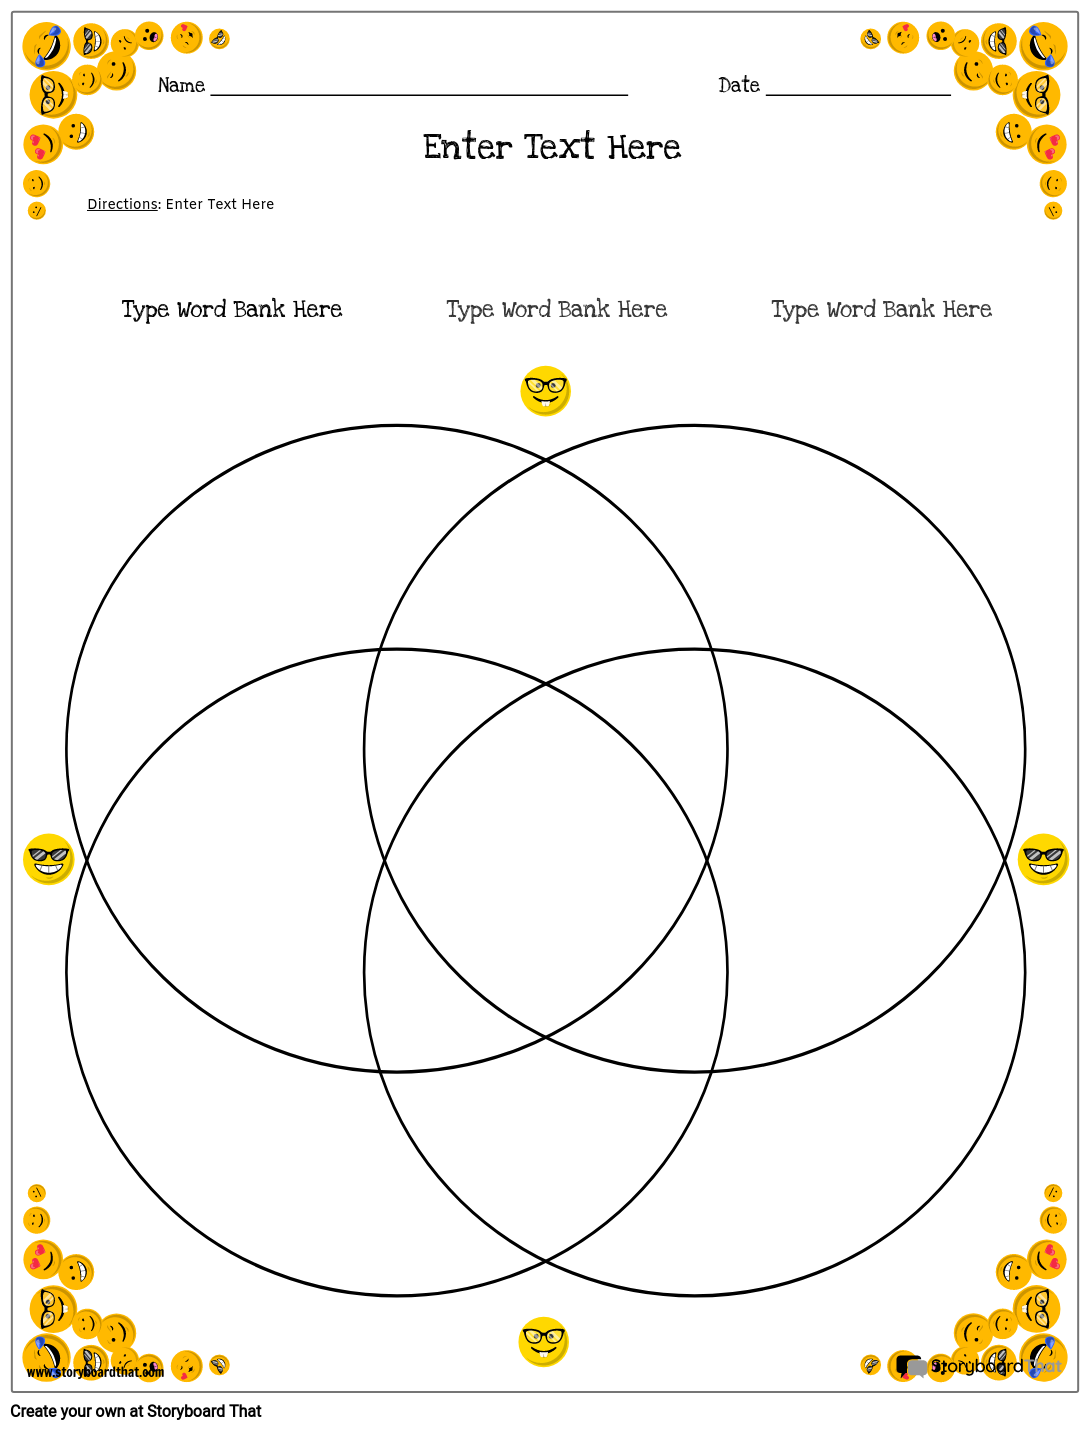 Emoji-Themed Venn Diagram Template